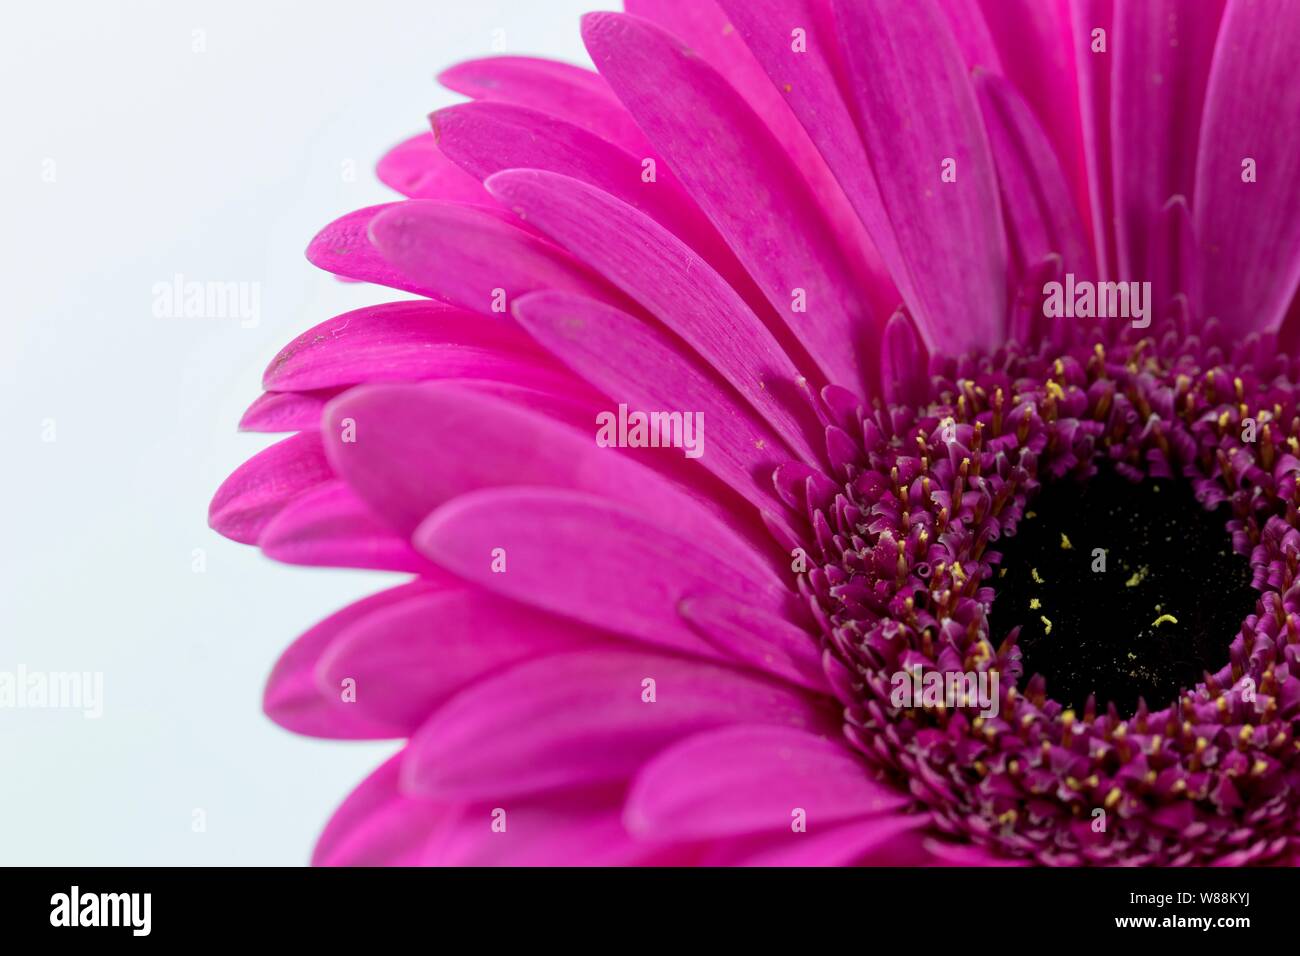 Purple pink daisy flower close up Stock Photo